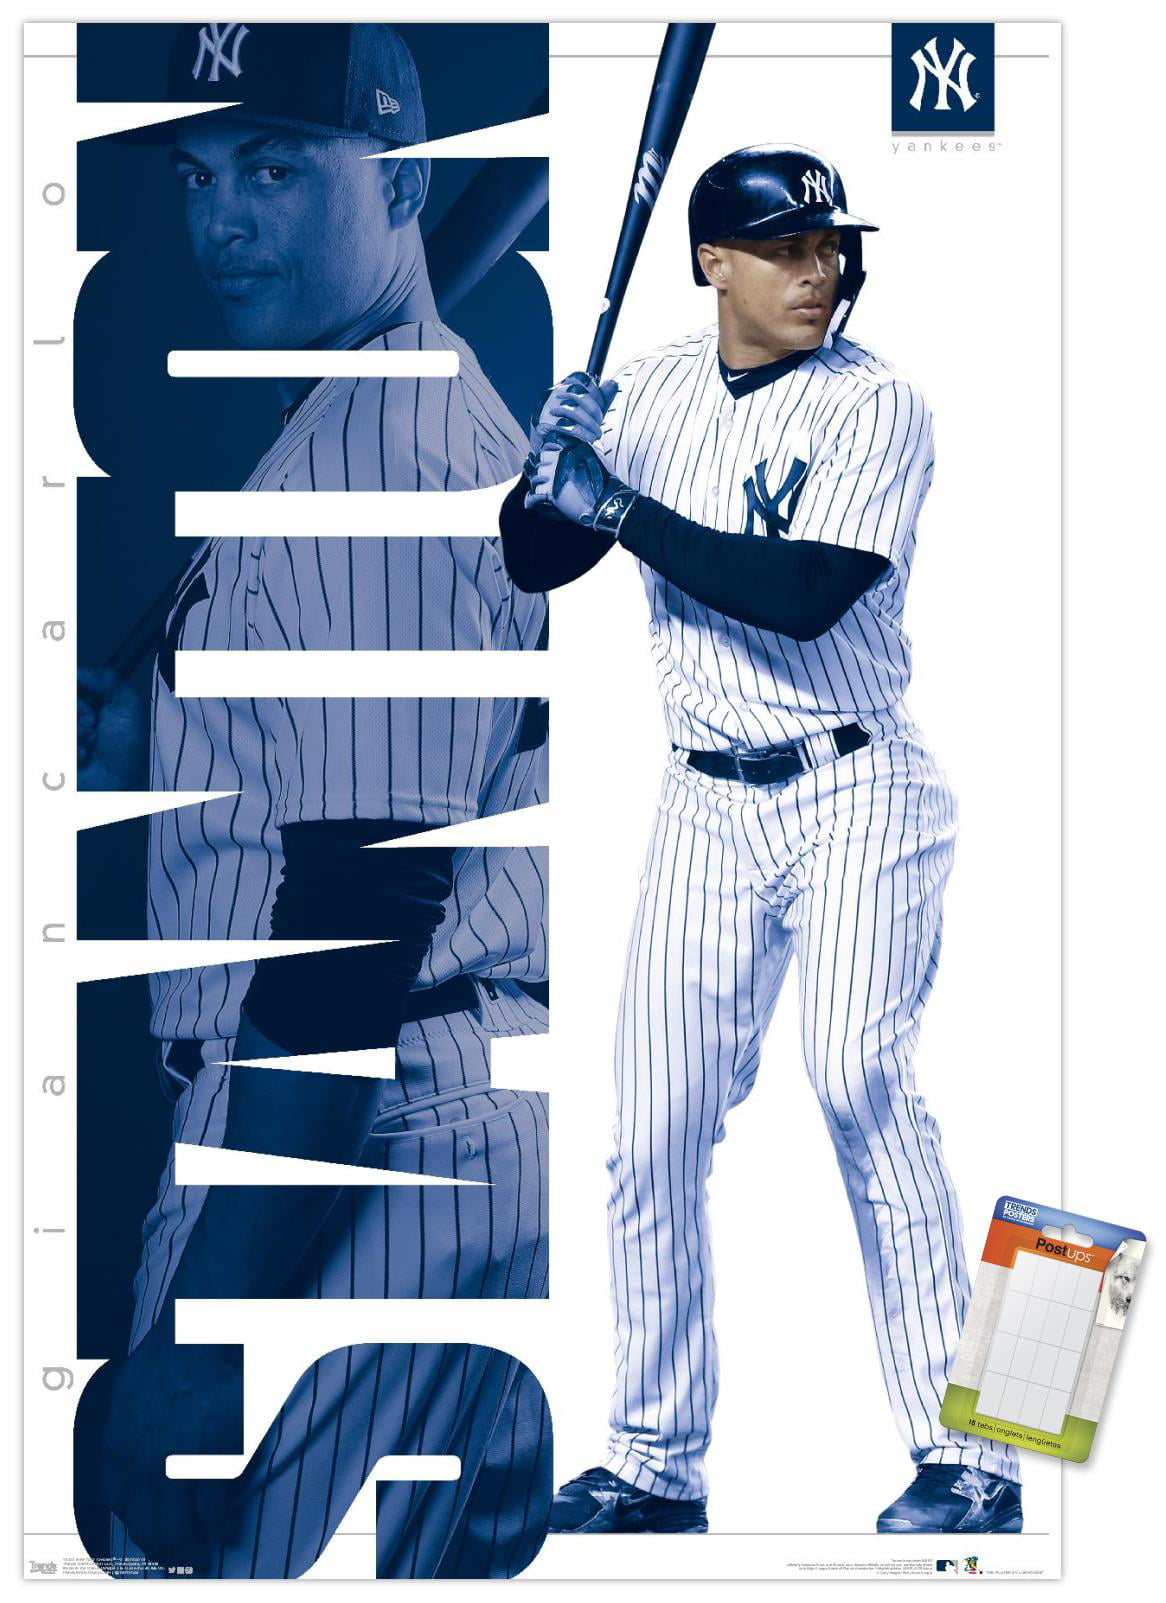  TnT Prints TMO2 New York Yankees Poster - Yankees Memorabilia,  Yankees Decor, Yankees Wall Decor, New York Yankees Decor - Yankees Wall  Art, New York Yankees Wall Decor - Unframed Set